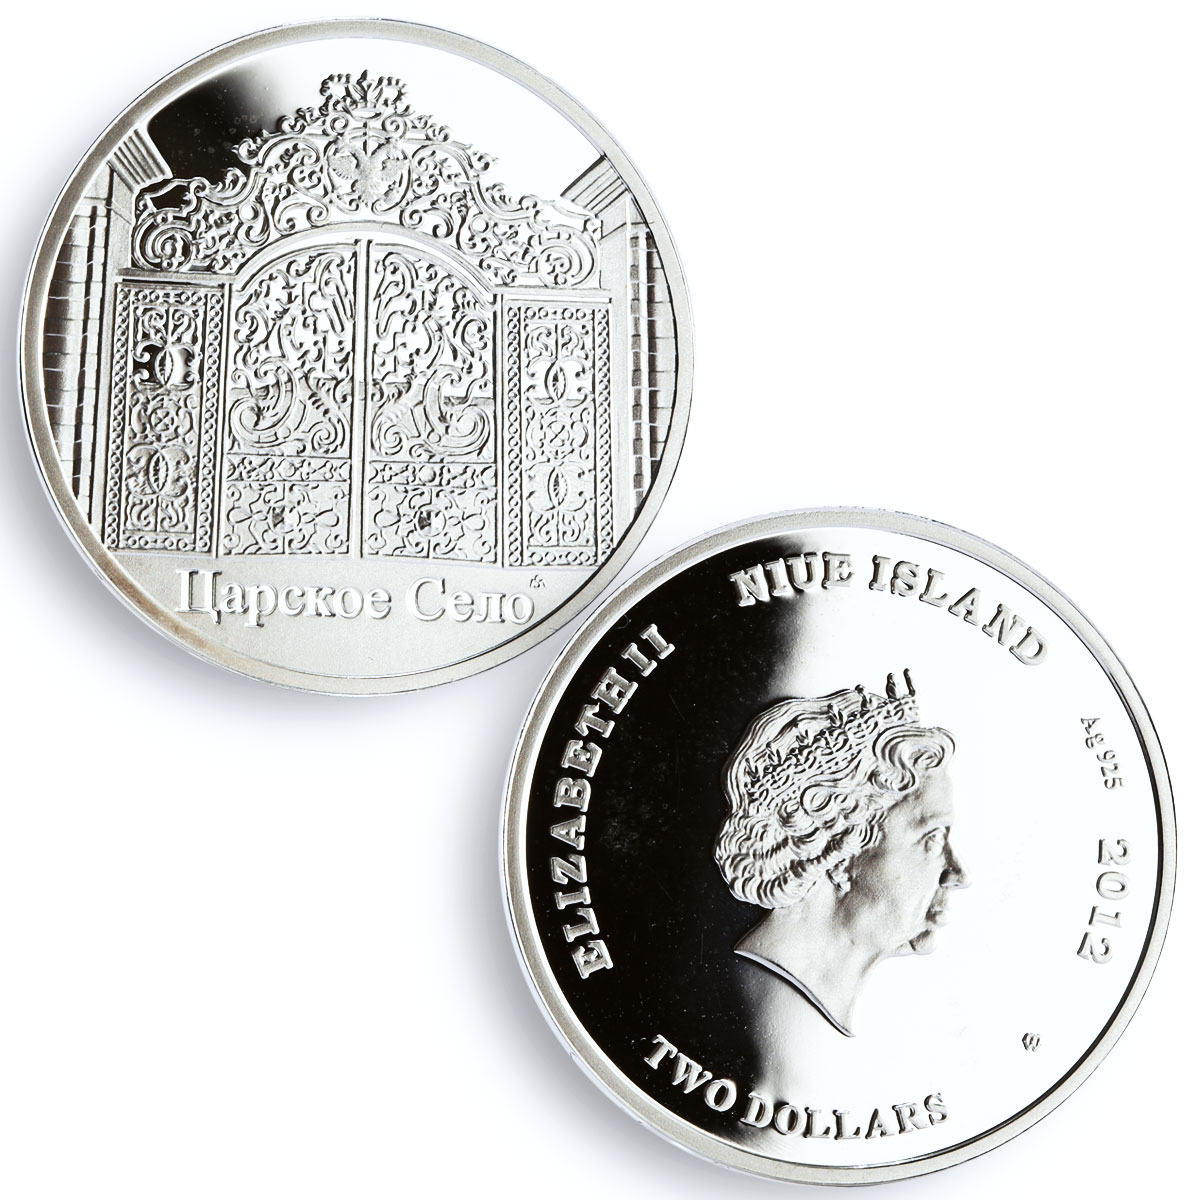 Niue set of 5 coins Emperors Residence Tsarskoye Selo proof silver coins 2012